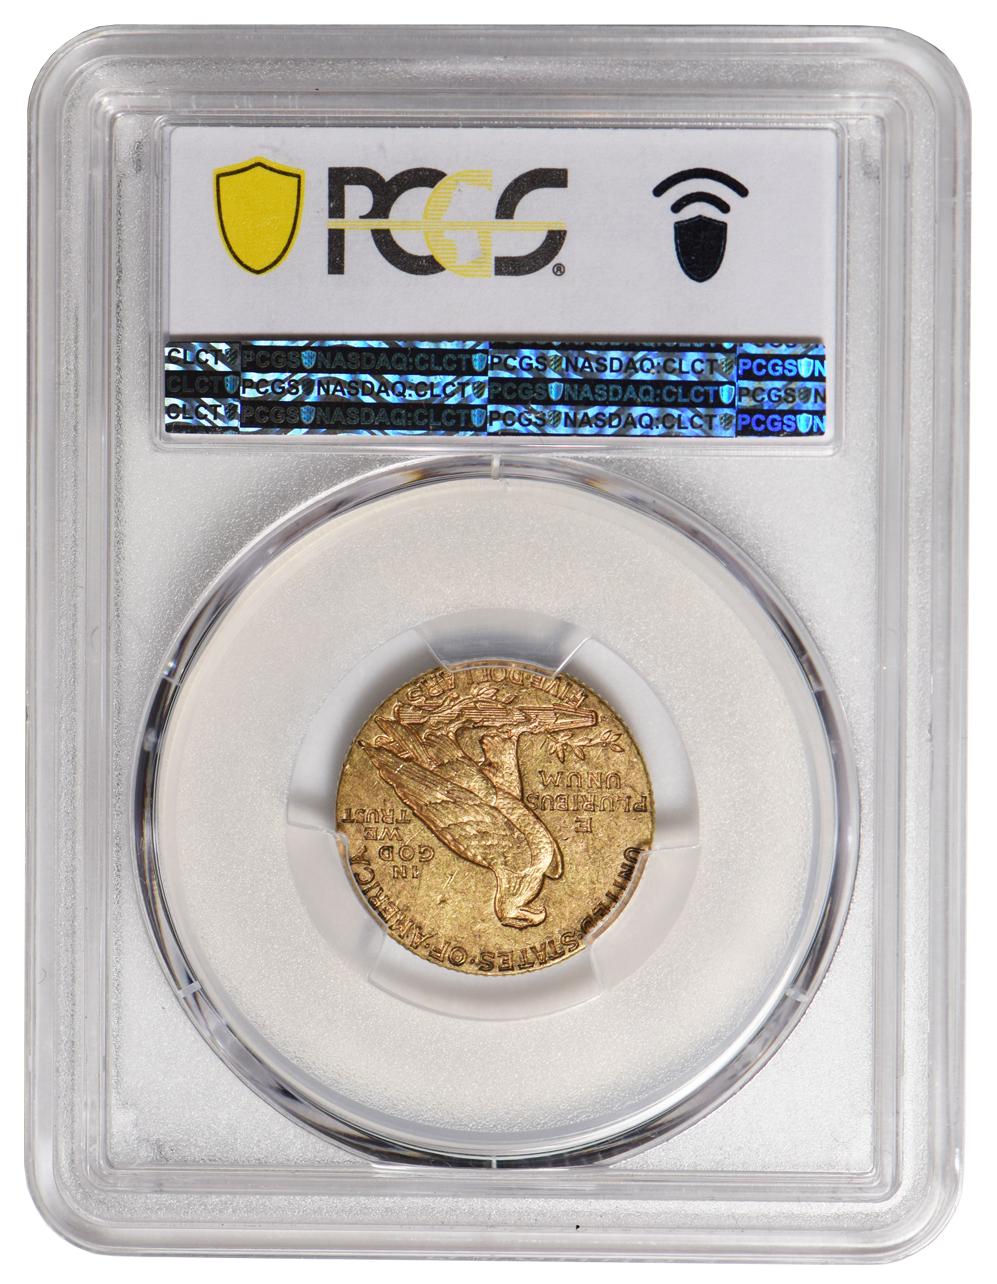 1909-S $5 Indian Head Half Eagle Gold Coin PCGS AU58